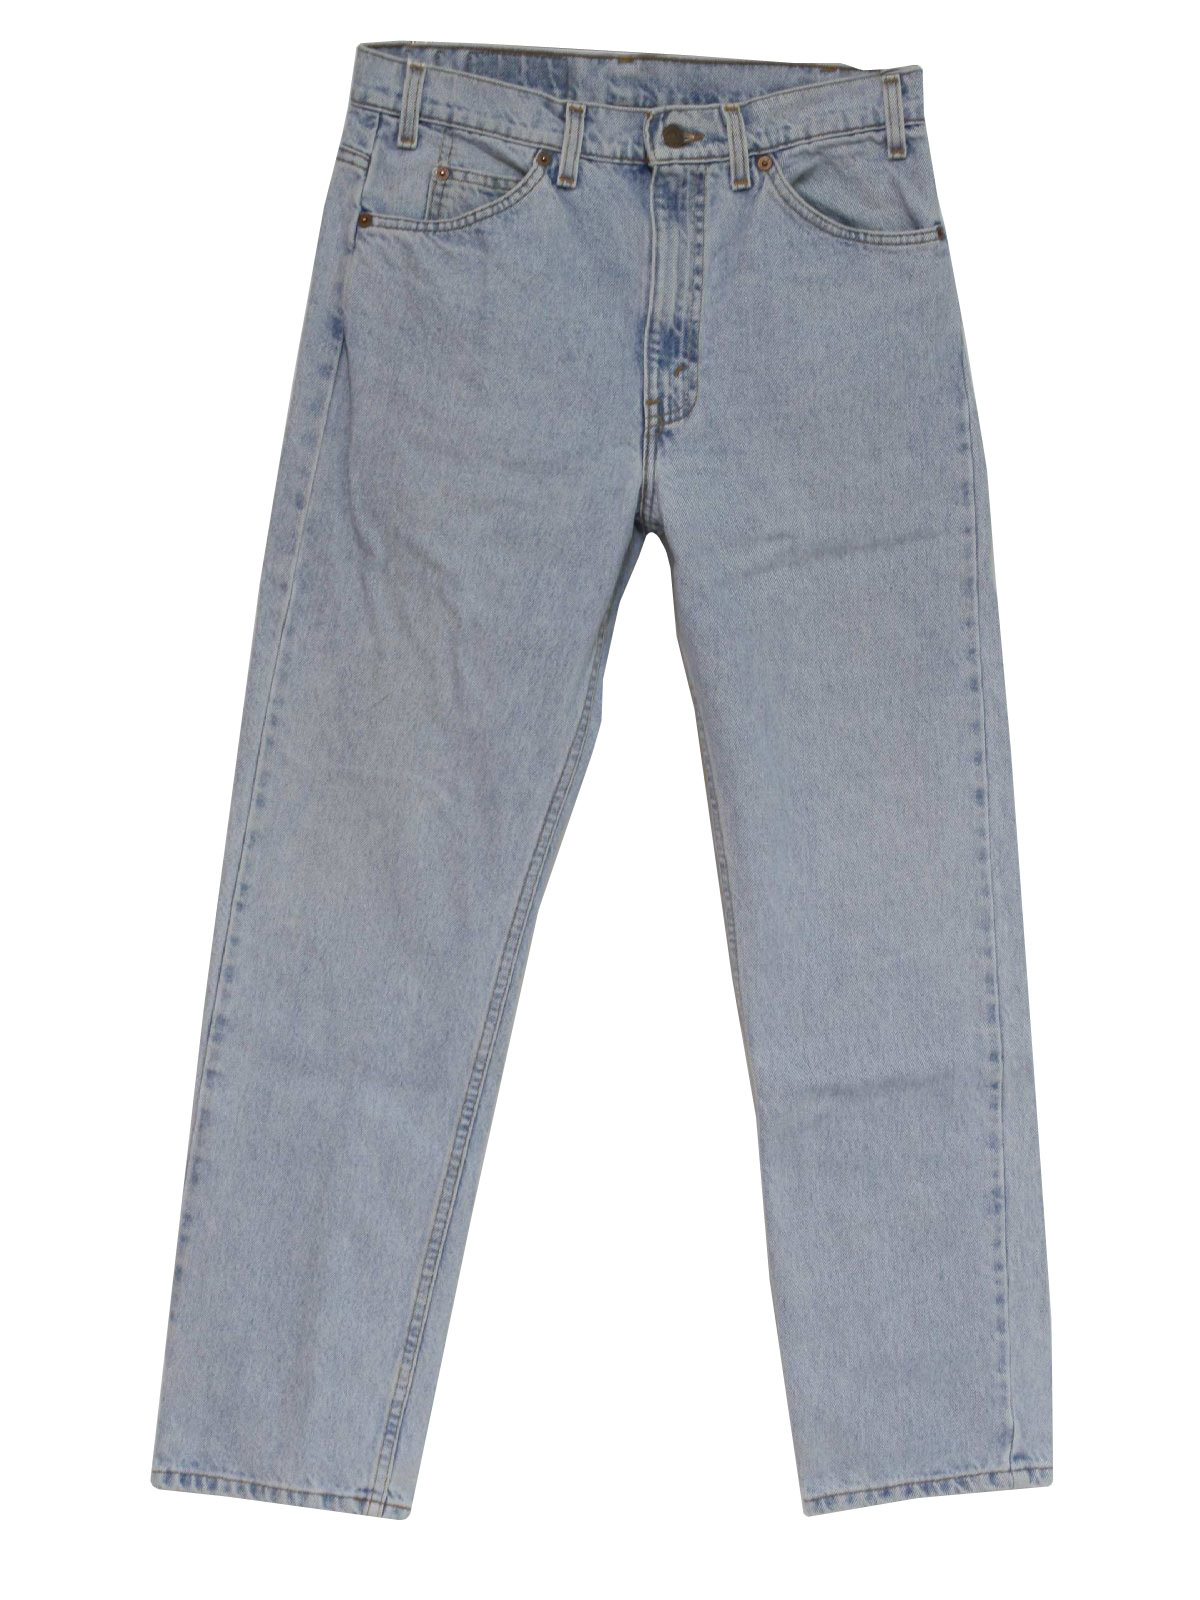 Ropa Elite, última moda: Levis jeans 90s